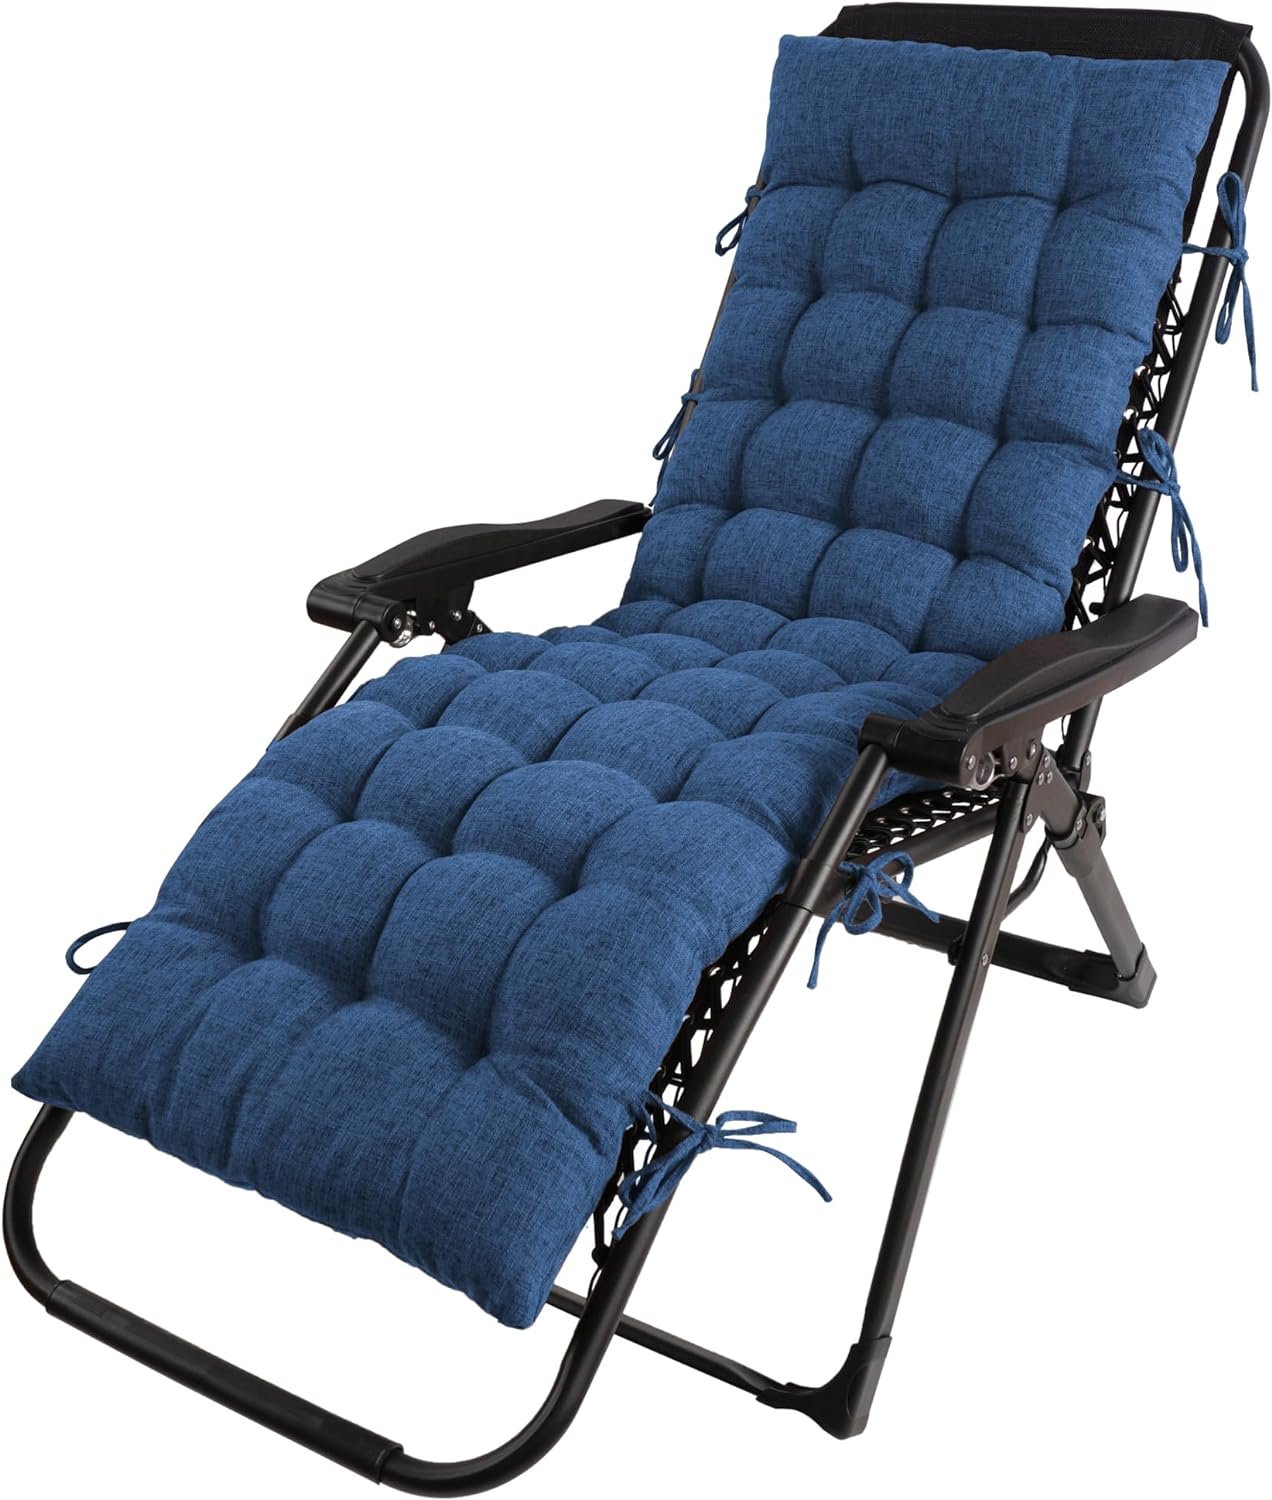 FlyGulls Lounge Chair Cushion Review